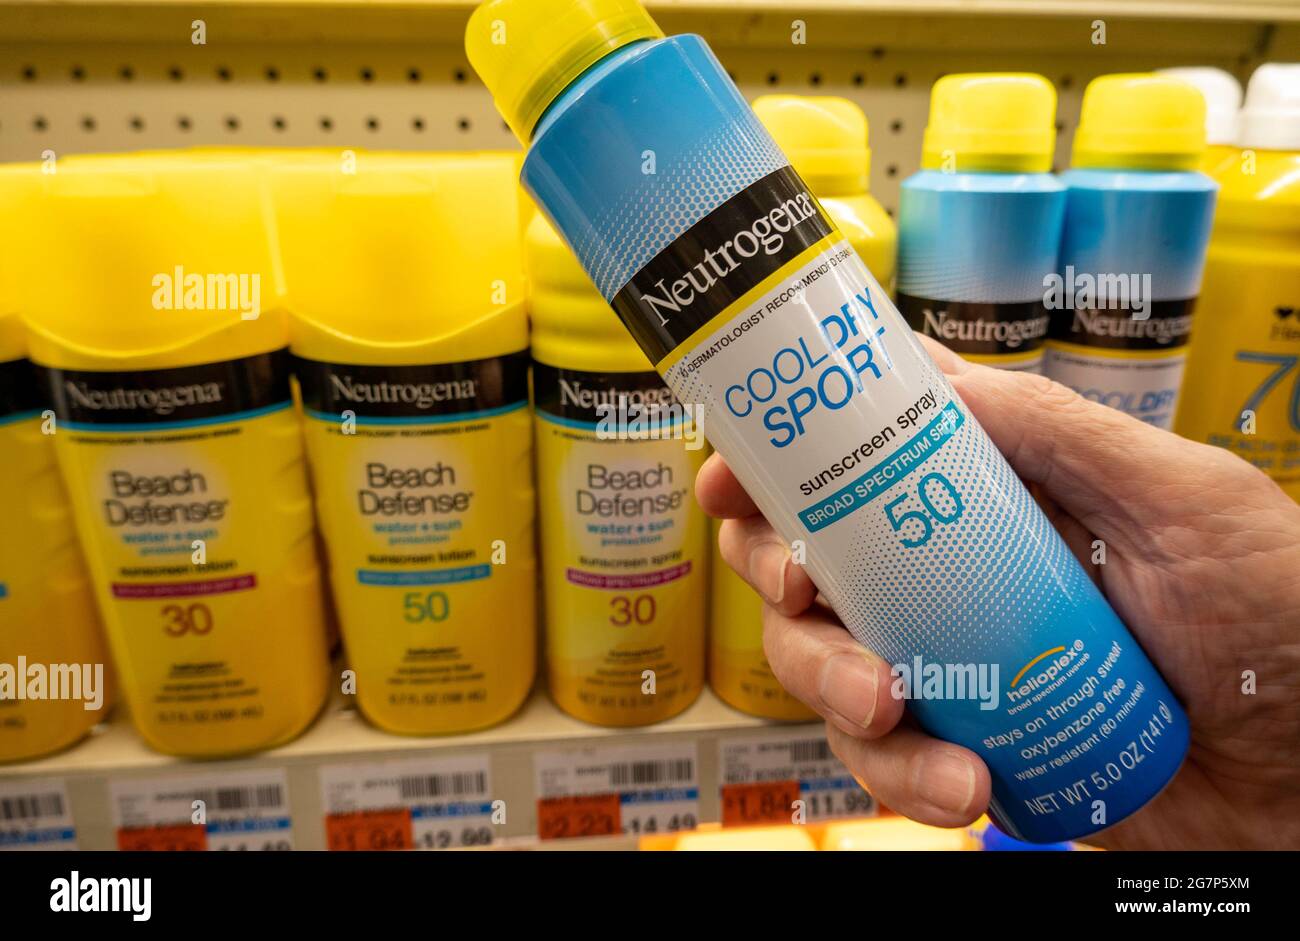 Neutrogena sunscreen es un producto de Johnson & Johnson, Estados Unidos  Fotografía de stock - Alamy